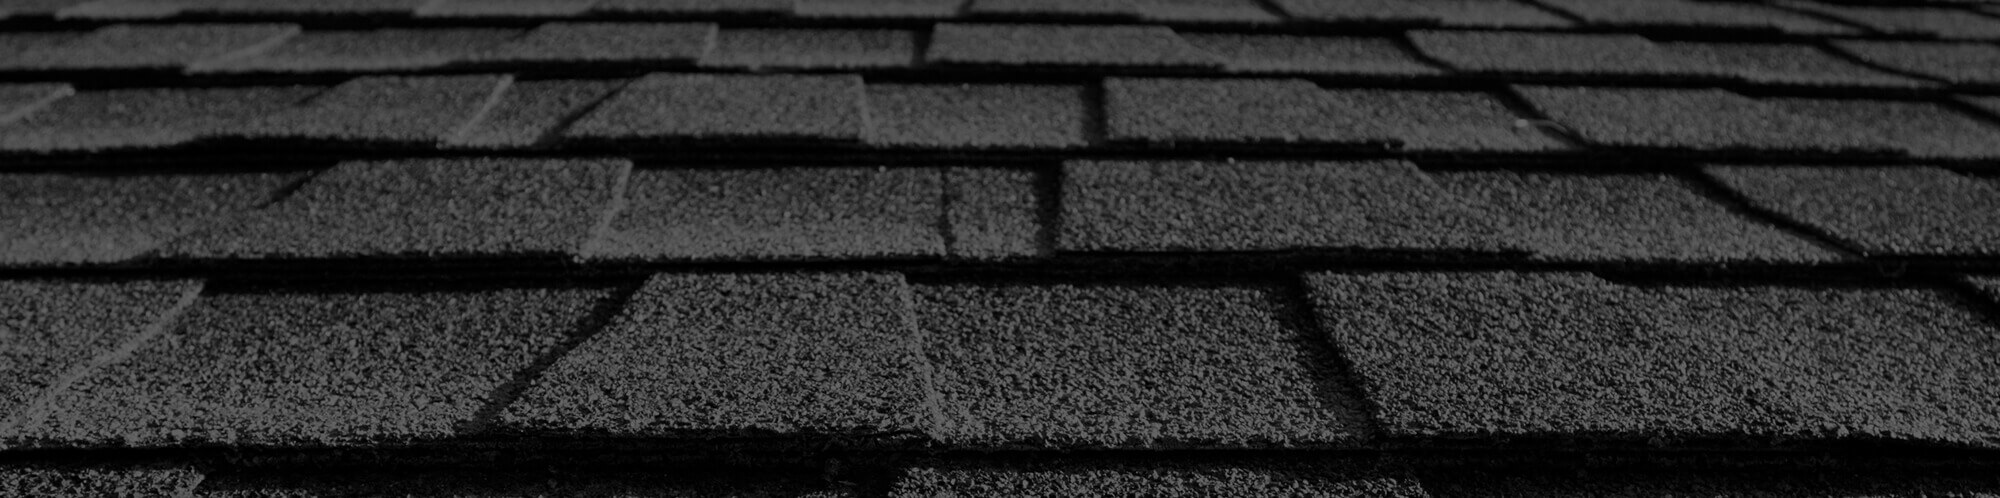 Roofing contractors repair asphalt shingles